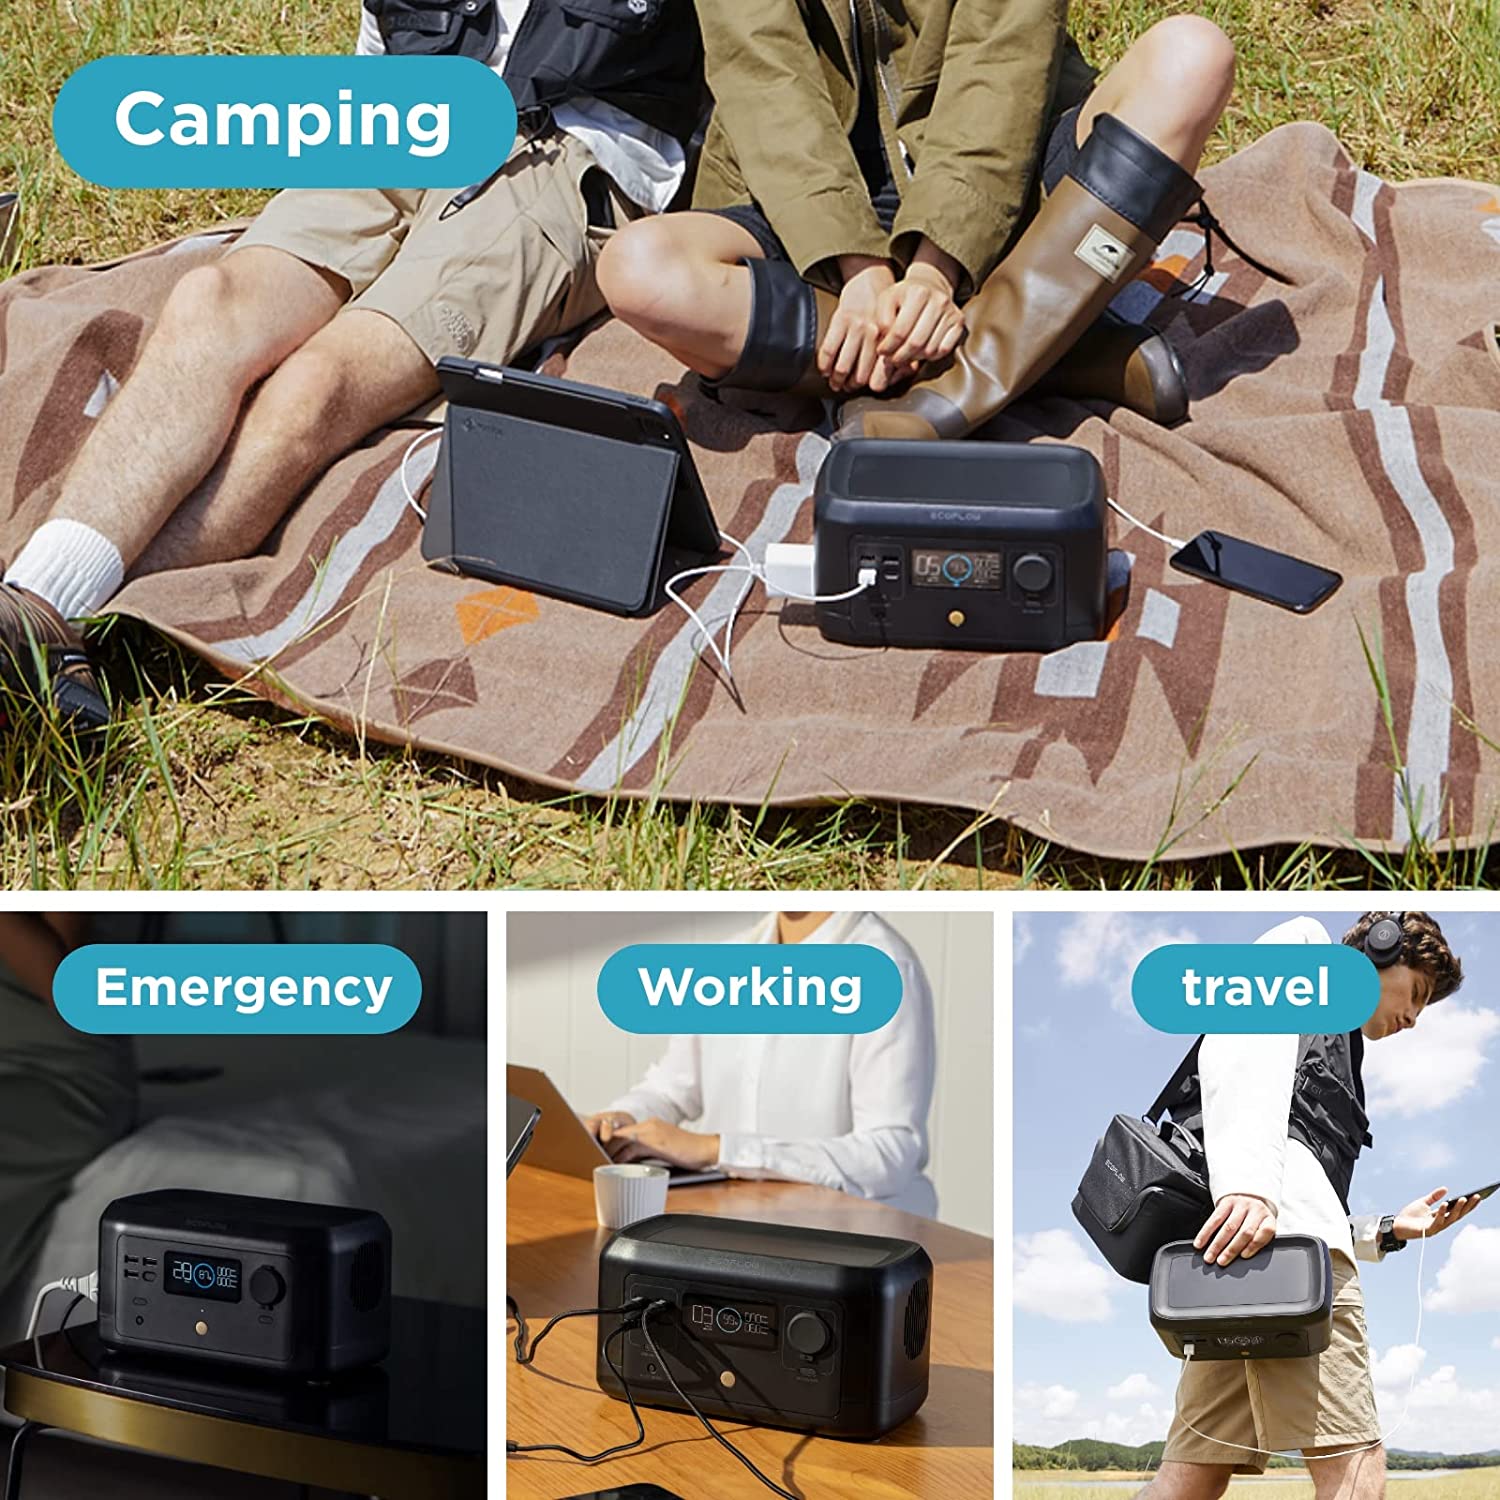 Camping Emergency Travel c 03 VIE VE